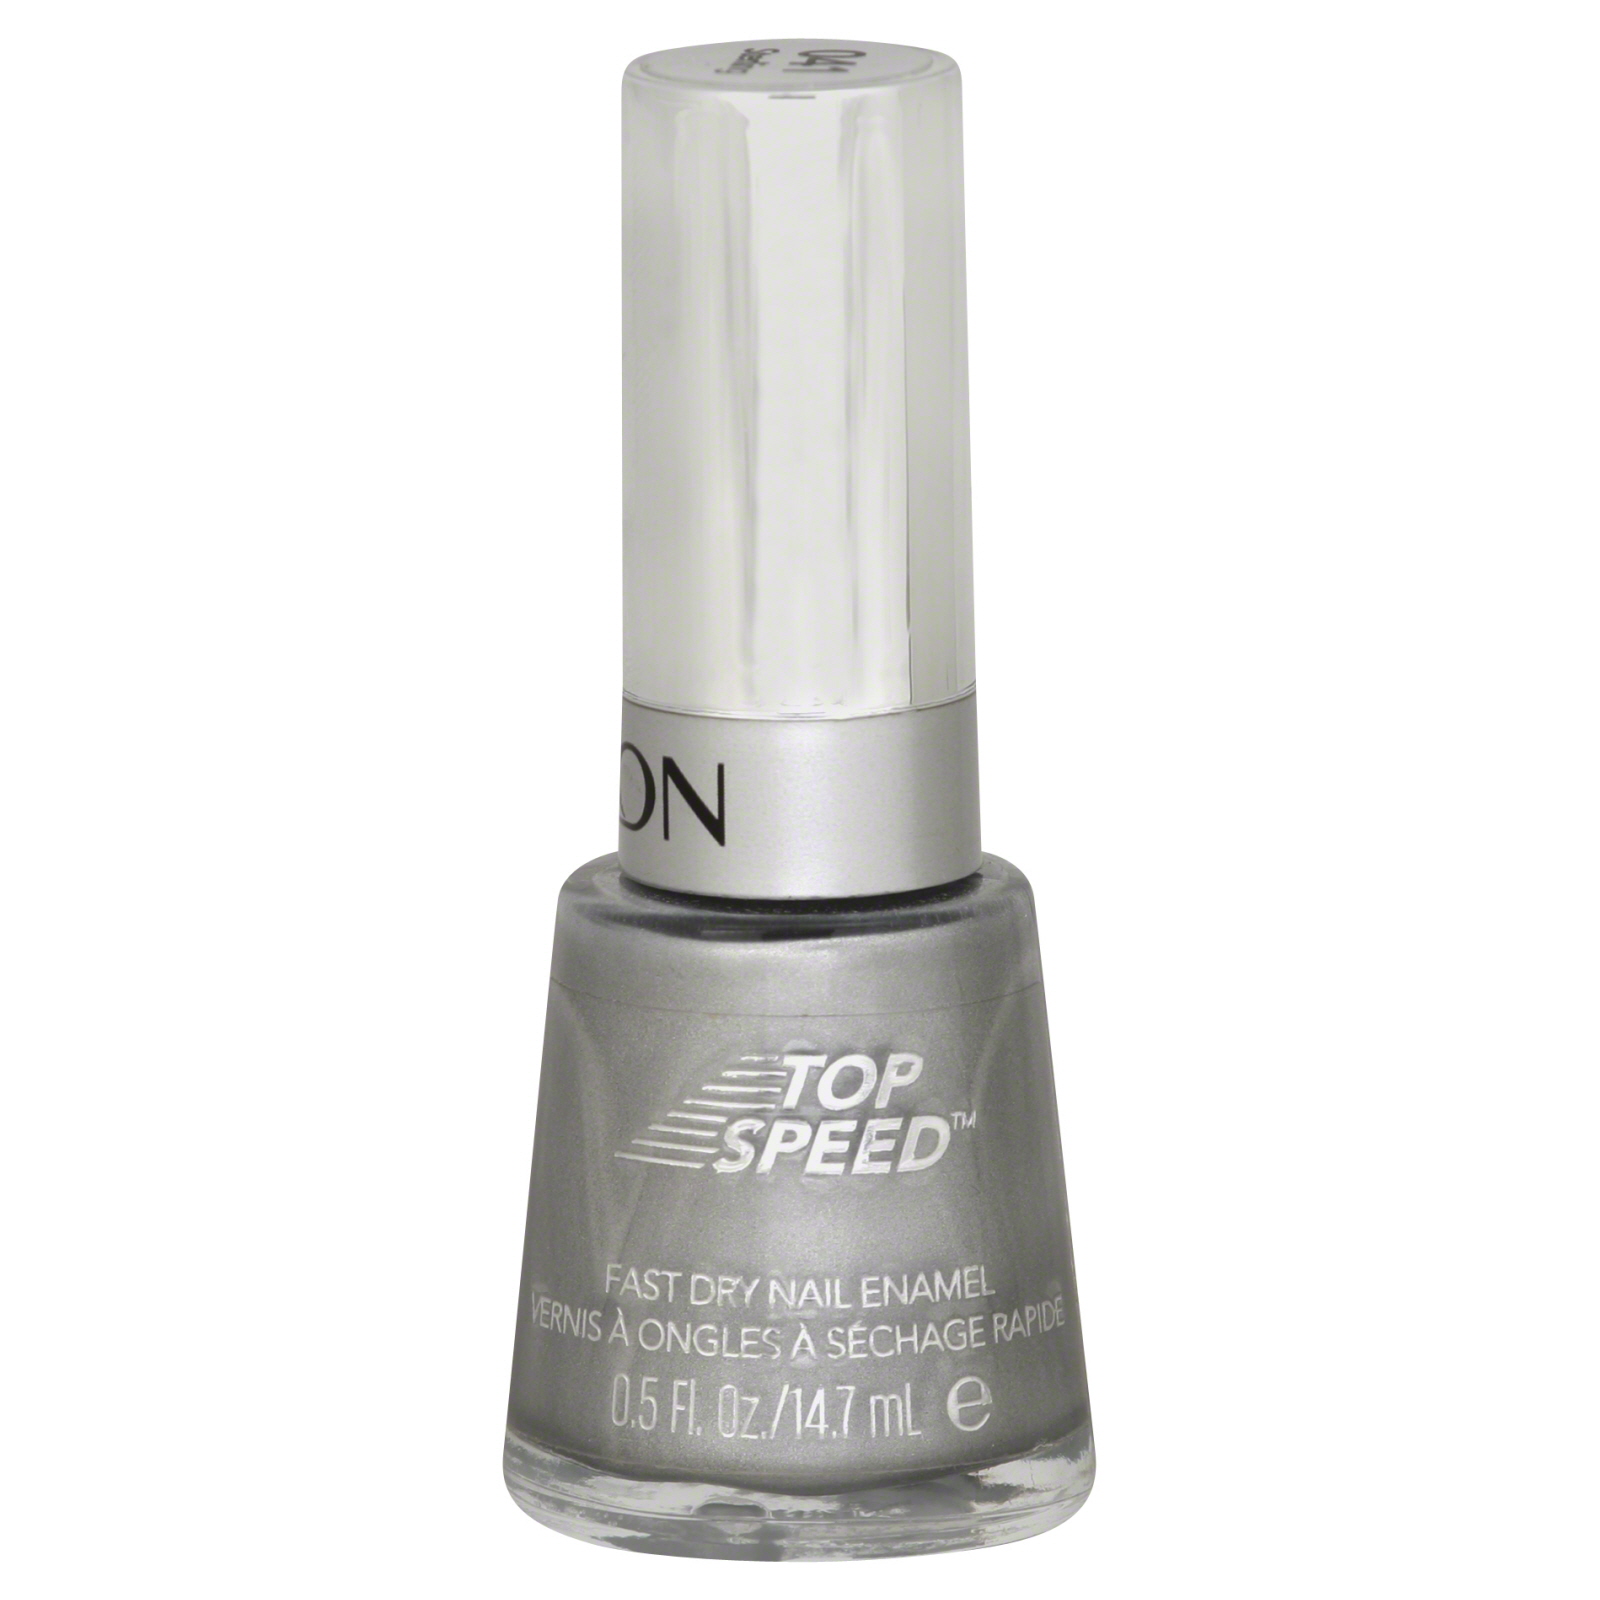 Top Speed Nail Enamel, Fast Dry, Sterling 041, 0.5 fl oz (14.7 ml)